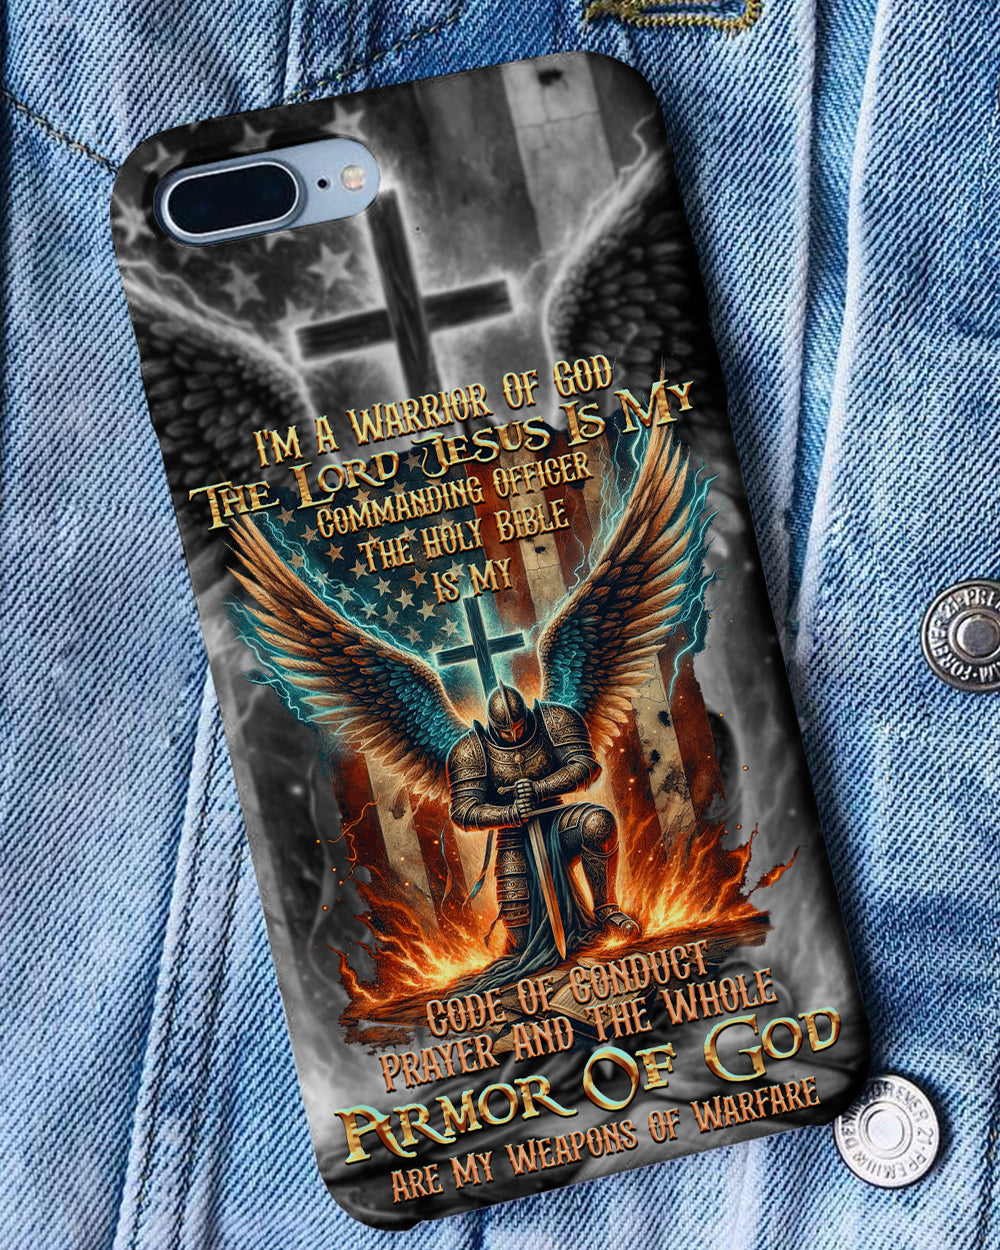 I'm A Warrior Of God Phone Case - Tytd041123